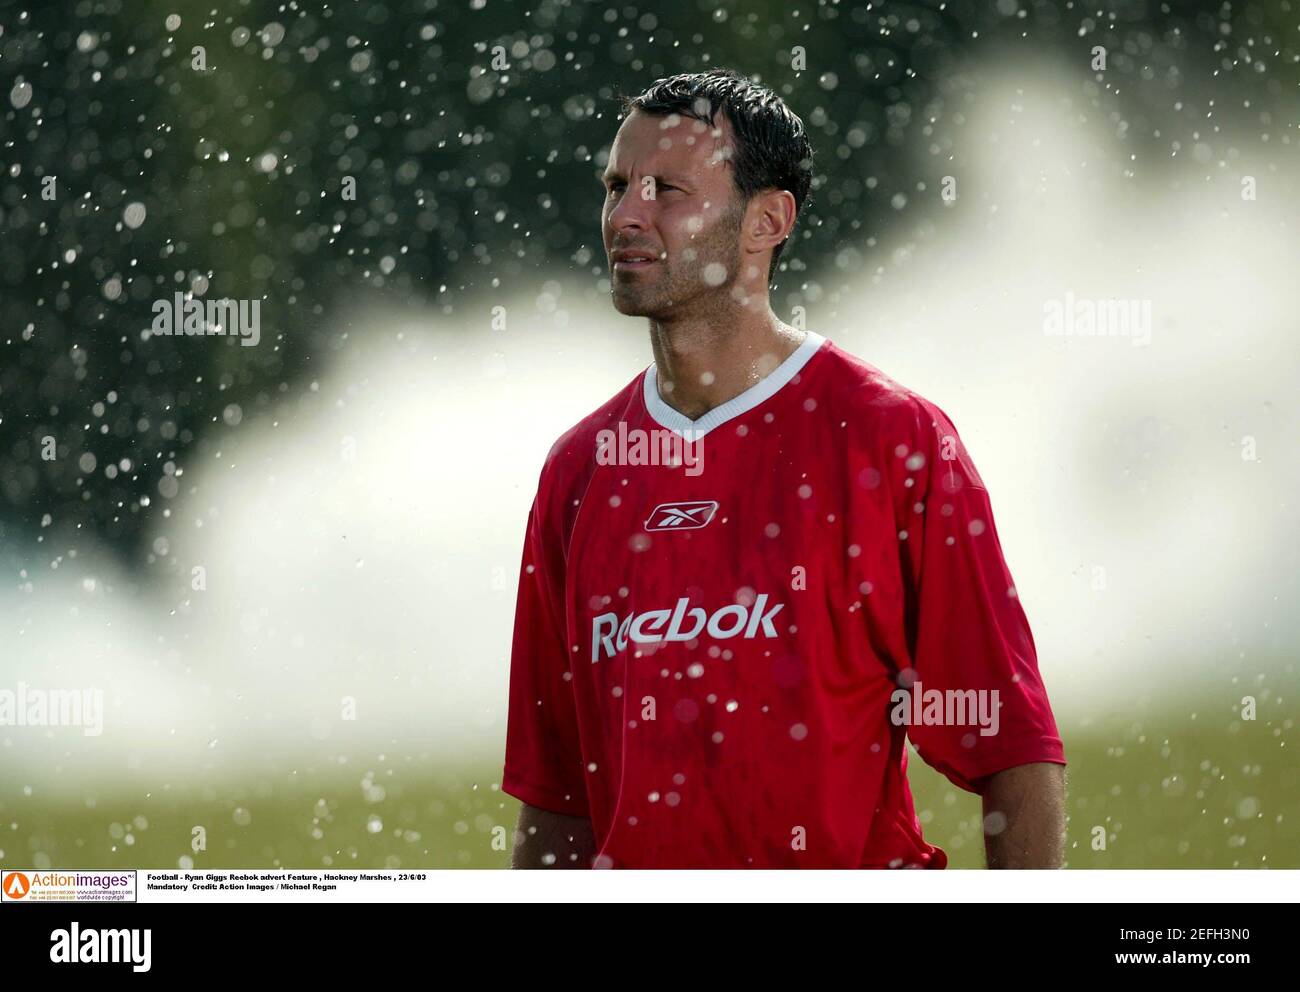 Football - Ryan Giggs Reebok advert Feature , Hackney Marshes , 23/6/03  Mandatory Credit: Action Images / Michael Regan Stock Photo - Alamy